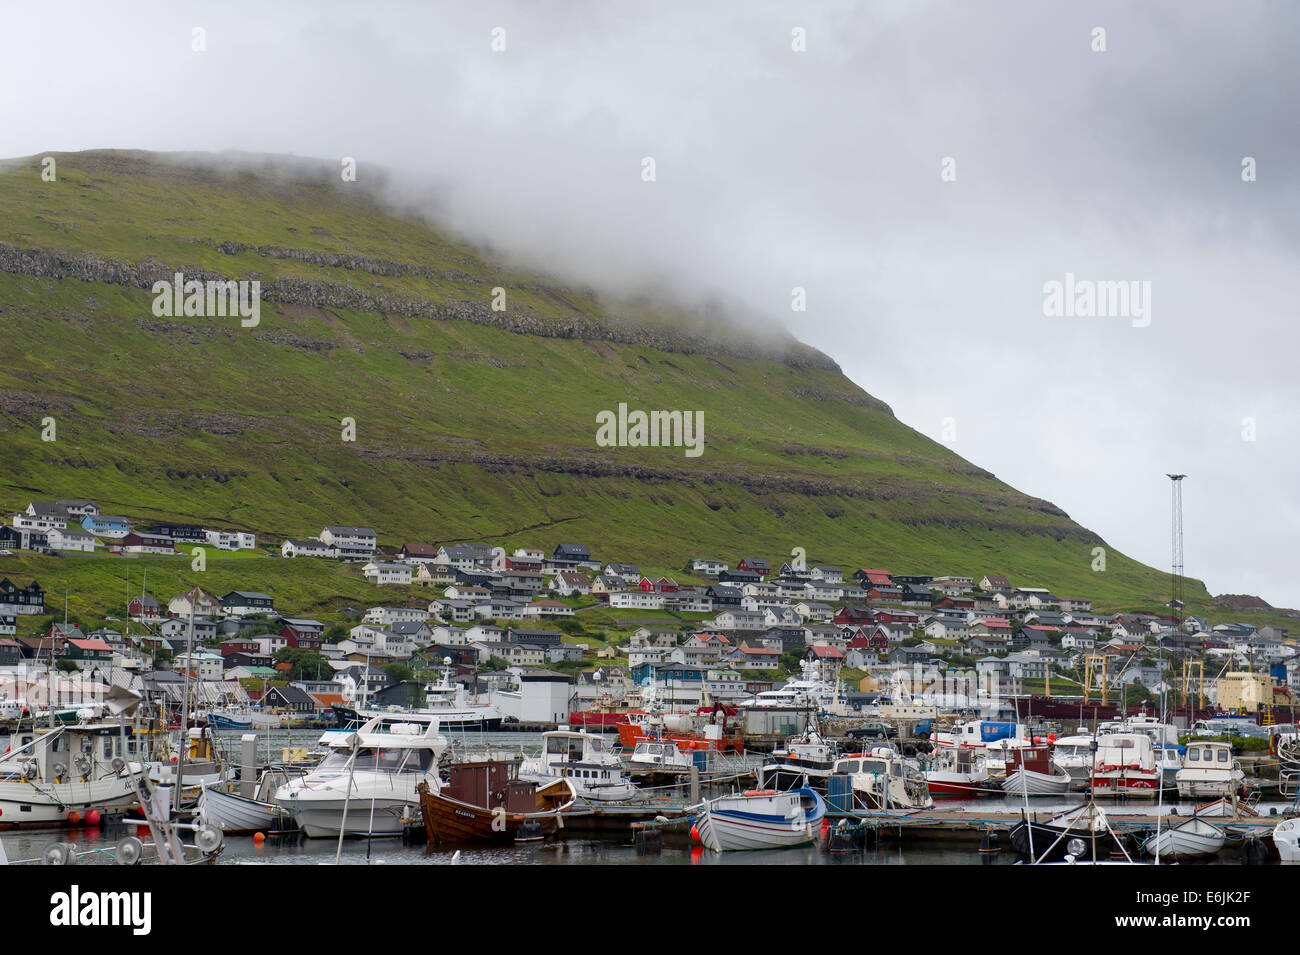 Fishing boats in the harbour at Klaksvík in the Faroe Islands. (klaksvik) Stock Photo